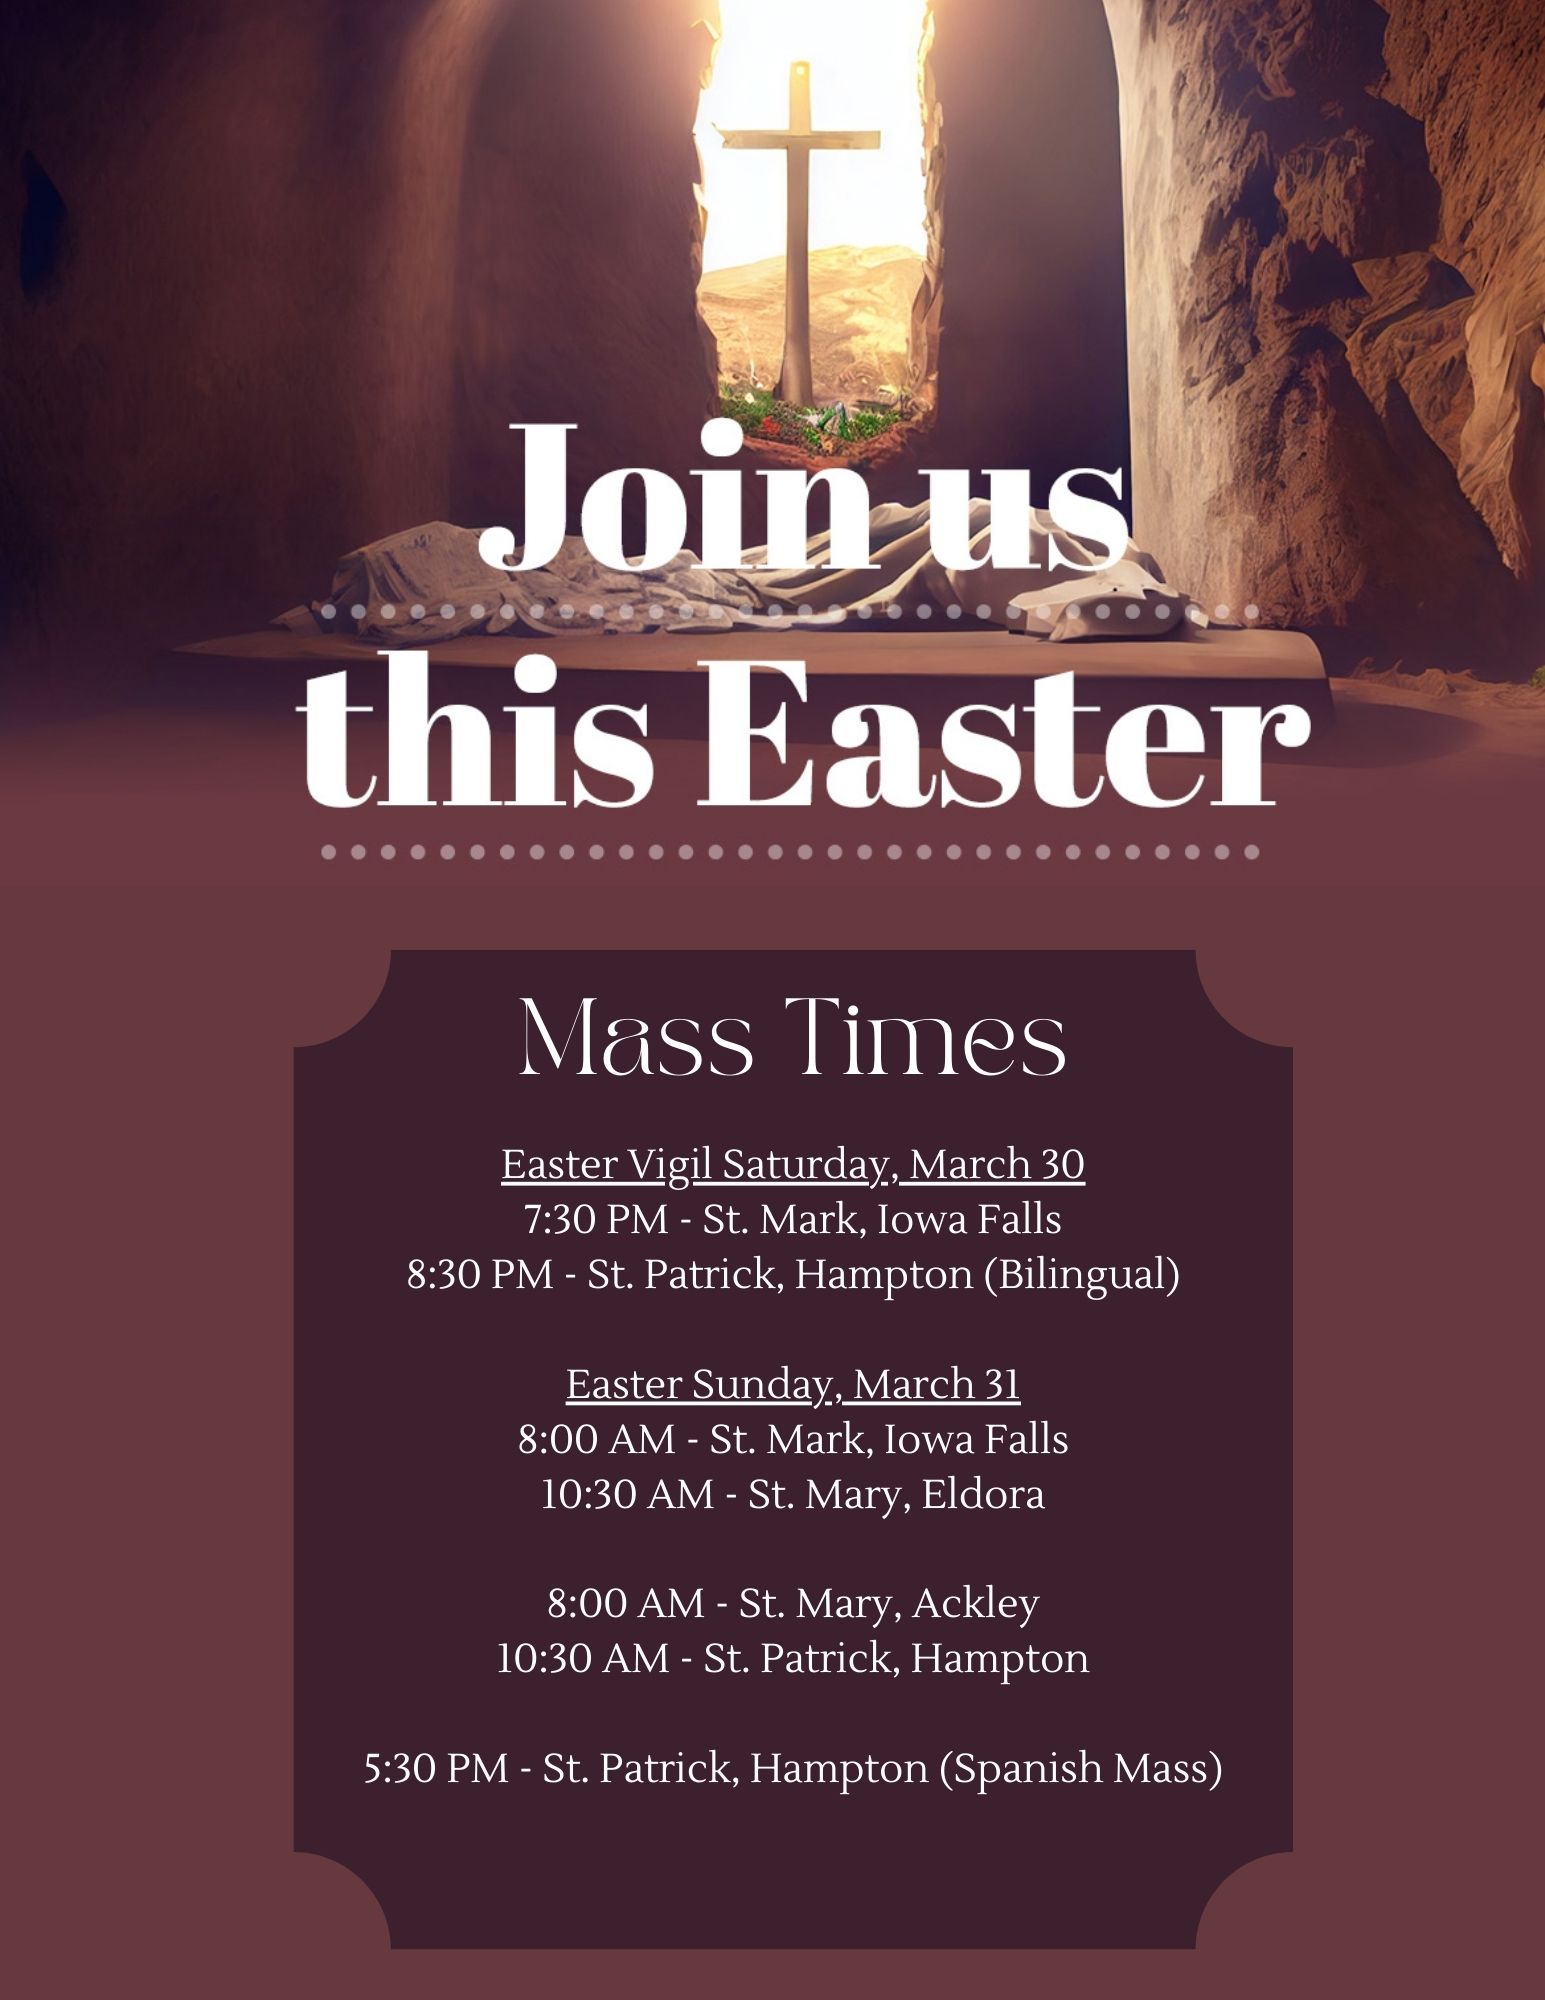 Easter Mass Times